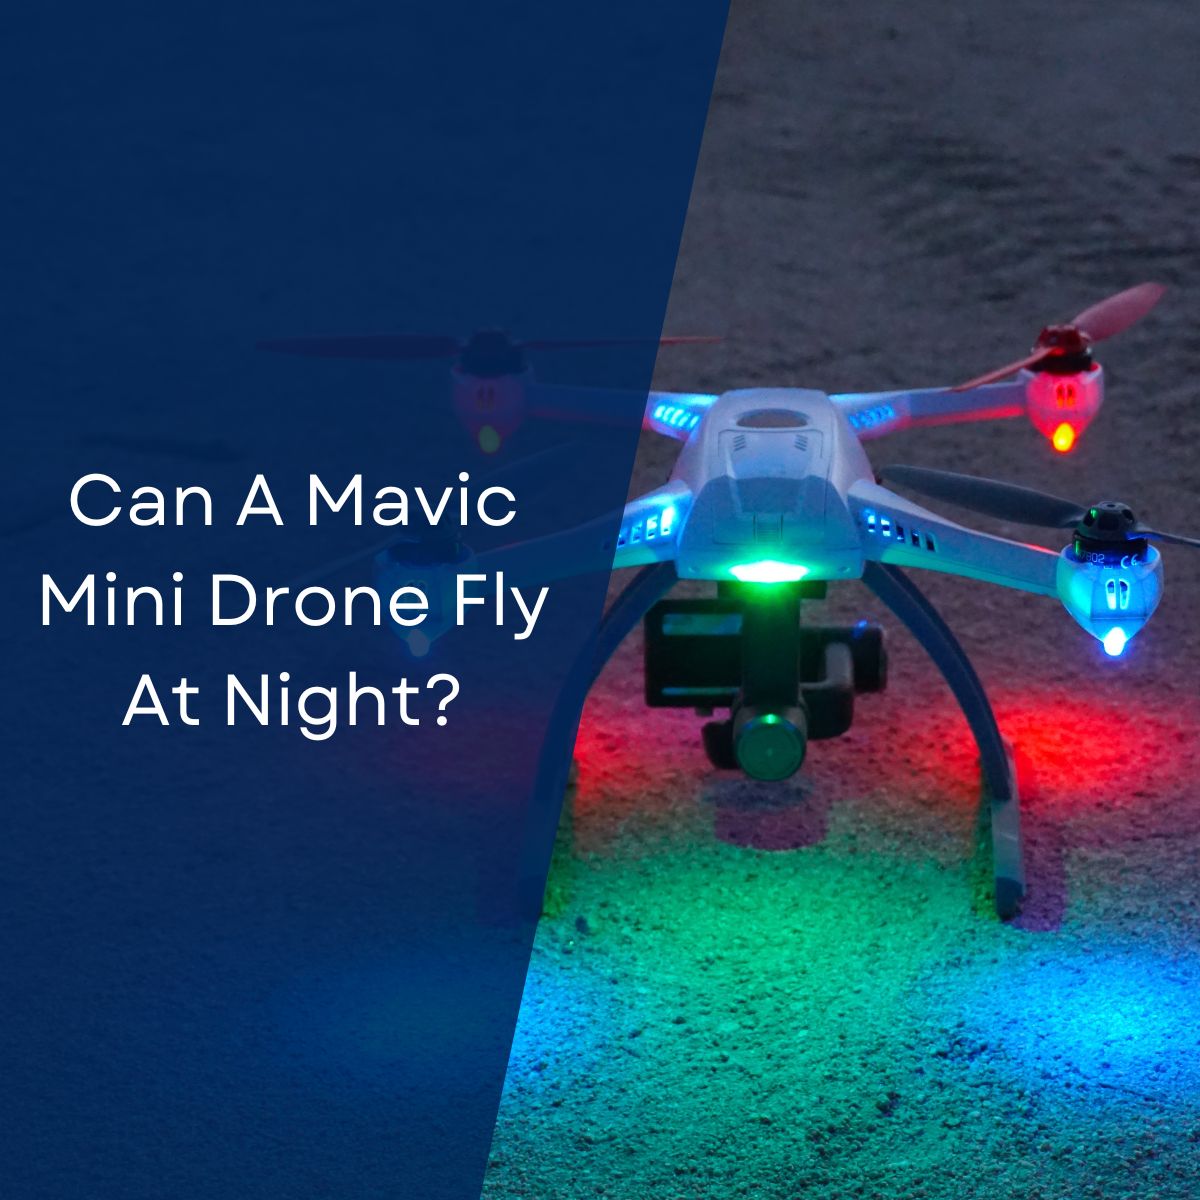 Can A Mavic Mini Drone Fly At Night?